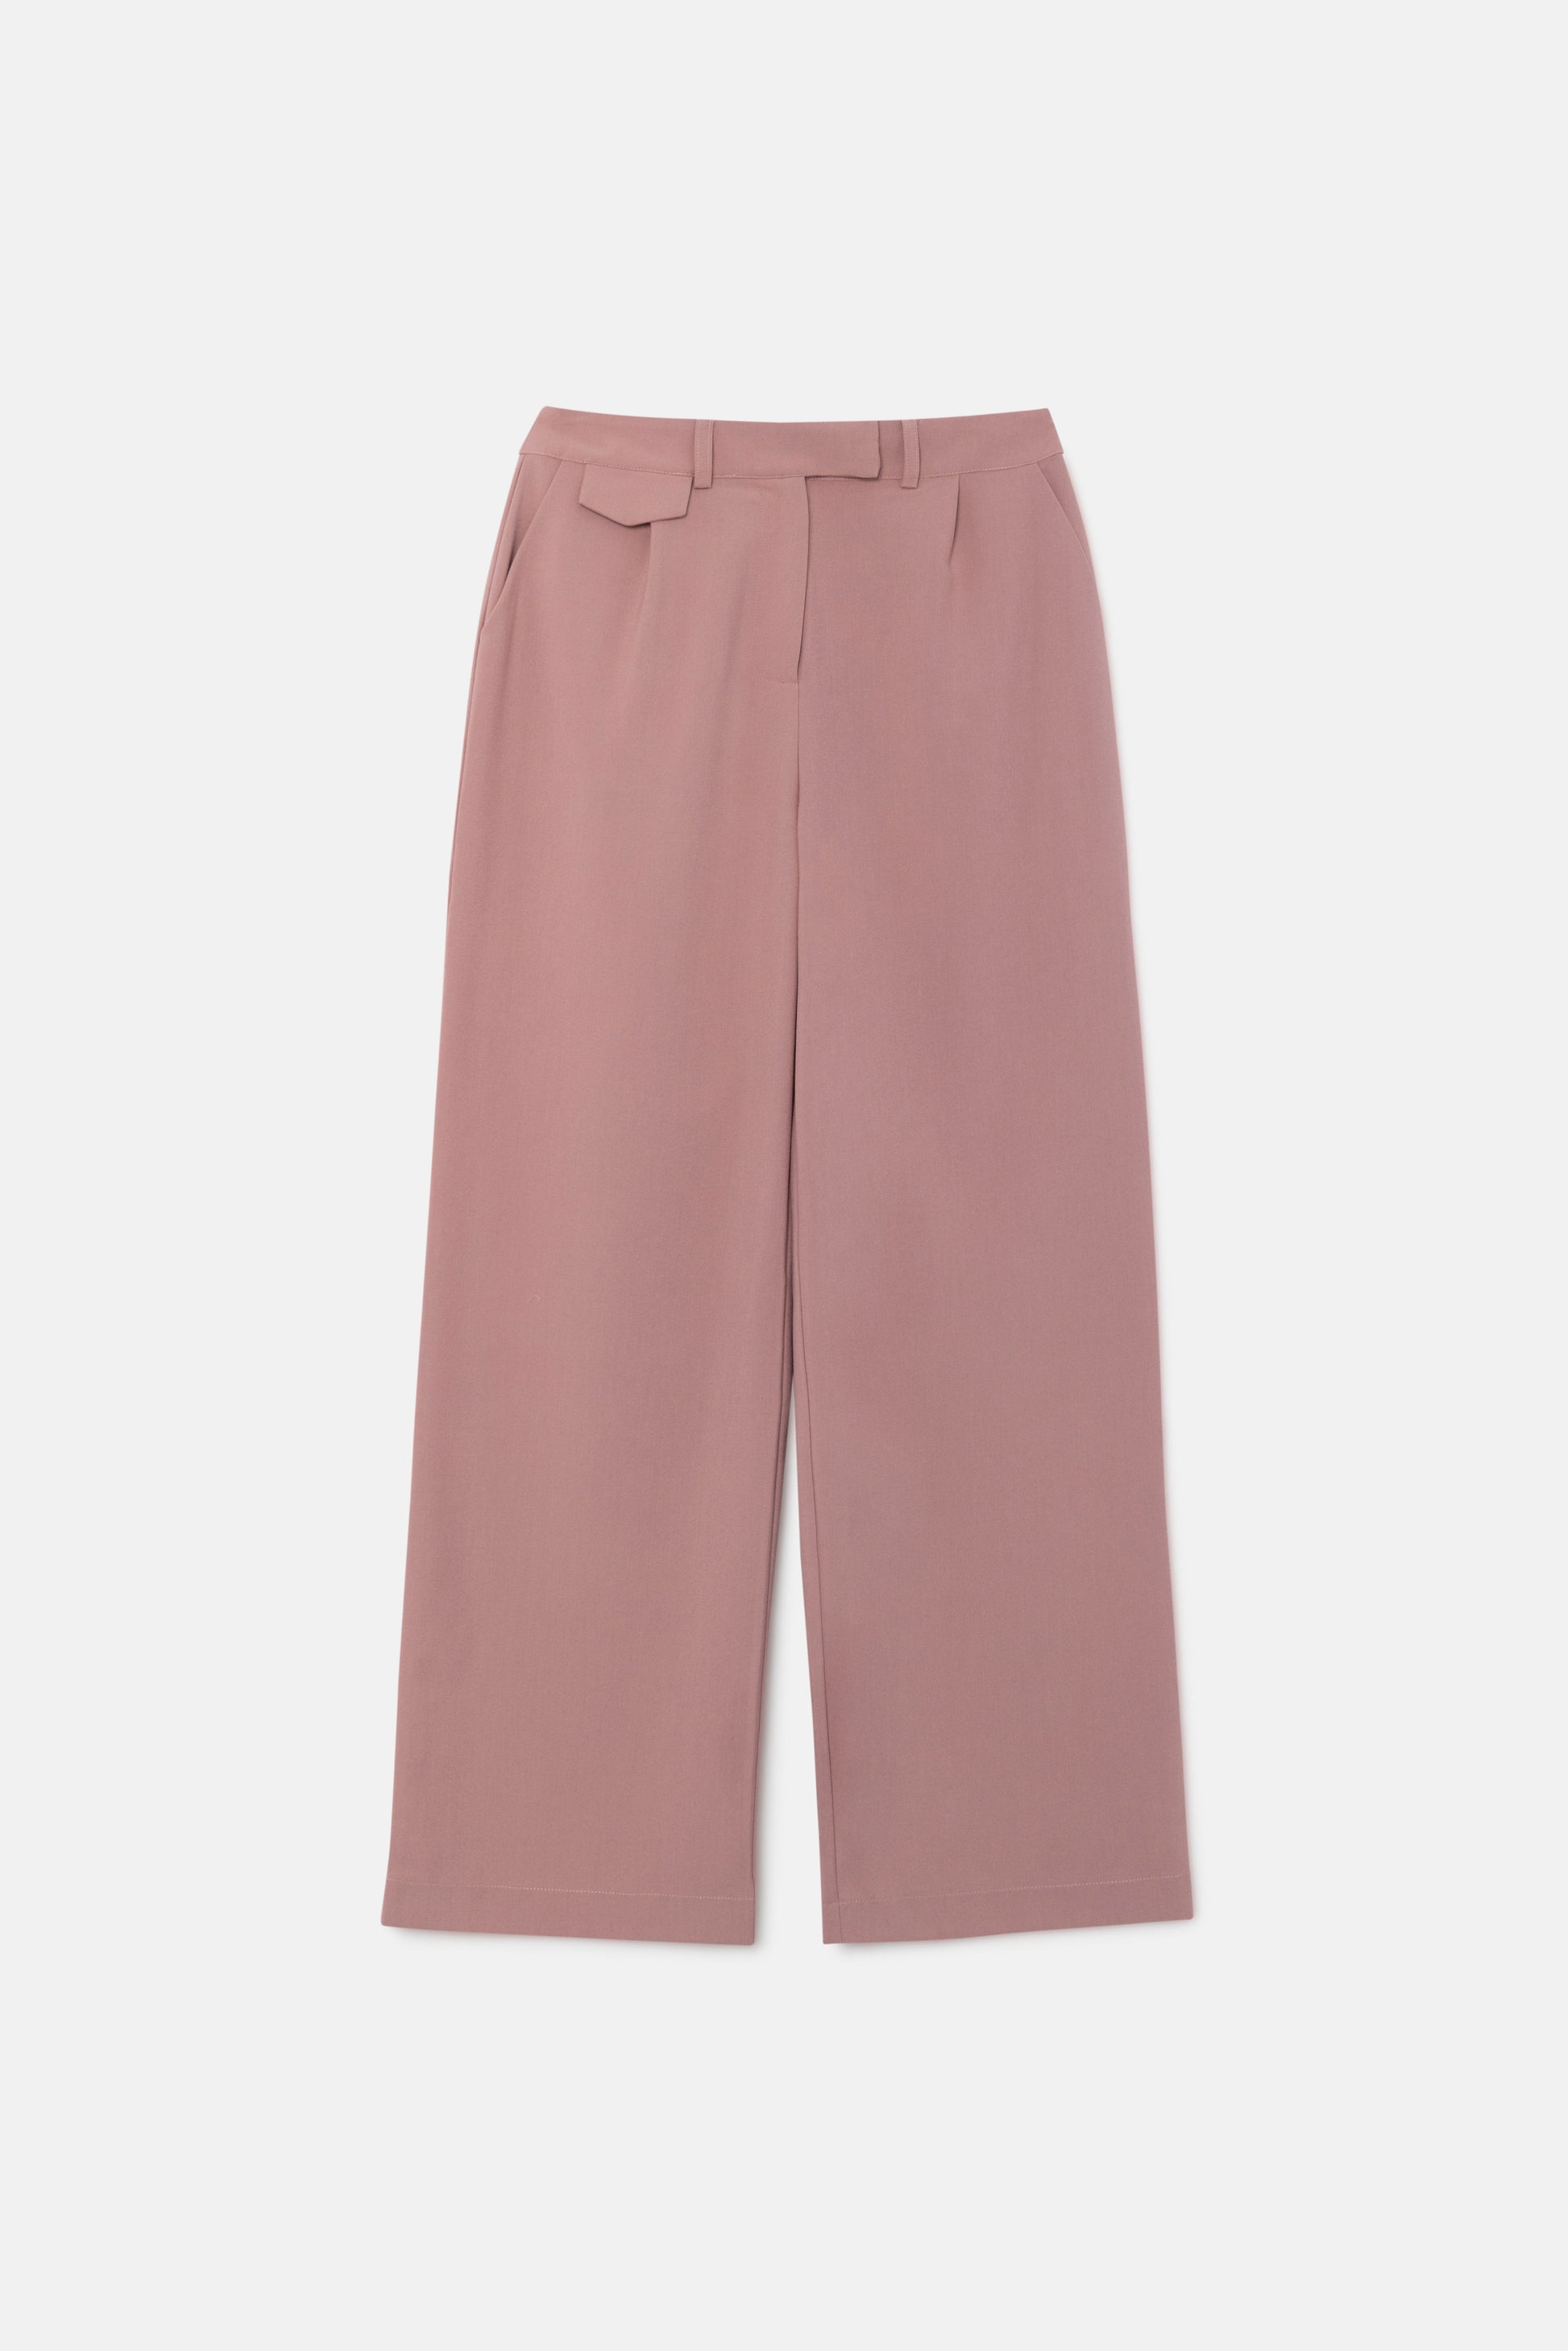 Pink crêpe suit pants